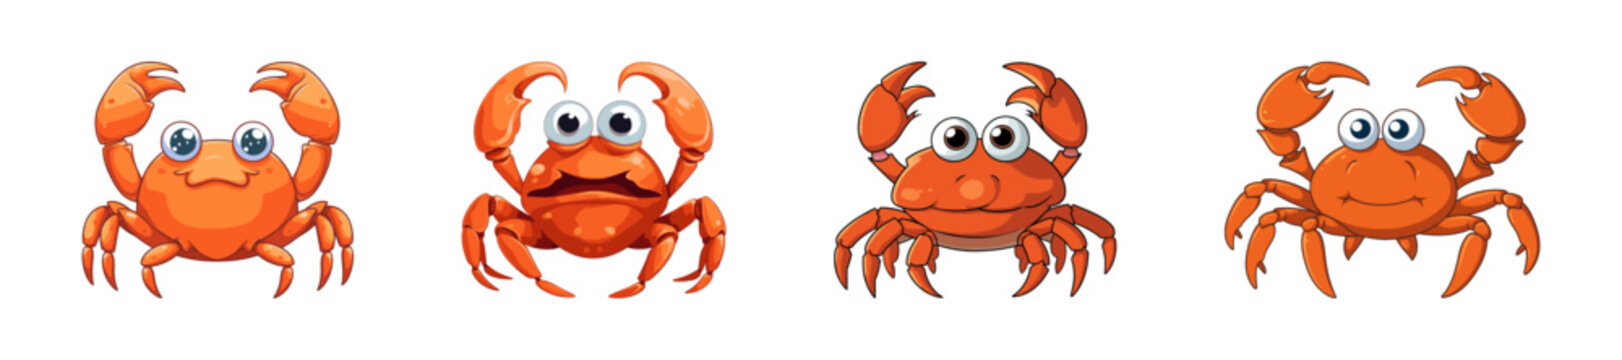 Cute cartoon crab set. Vector illustration.